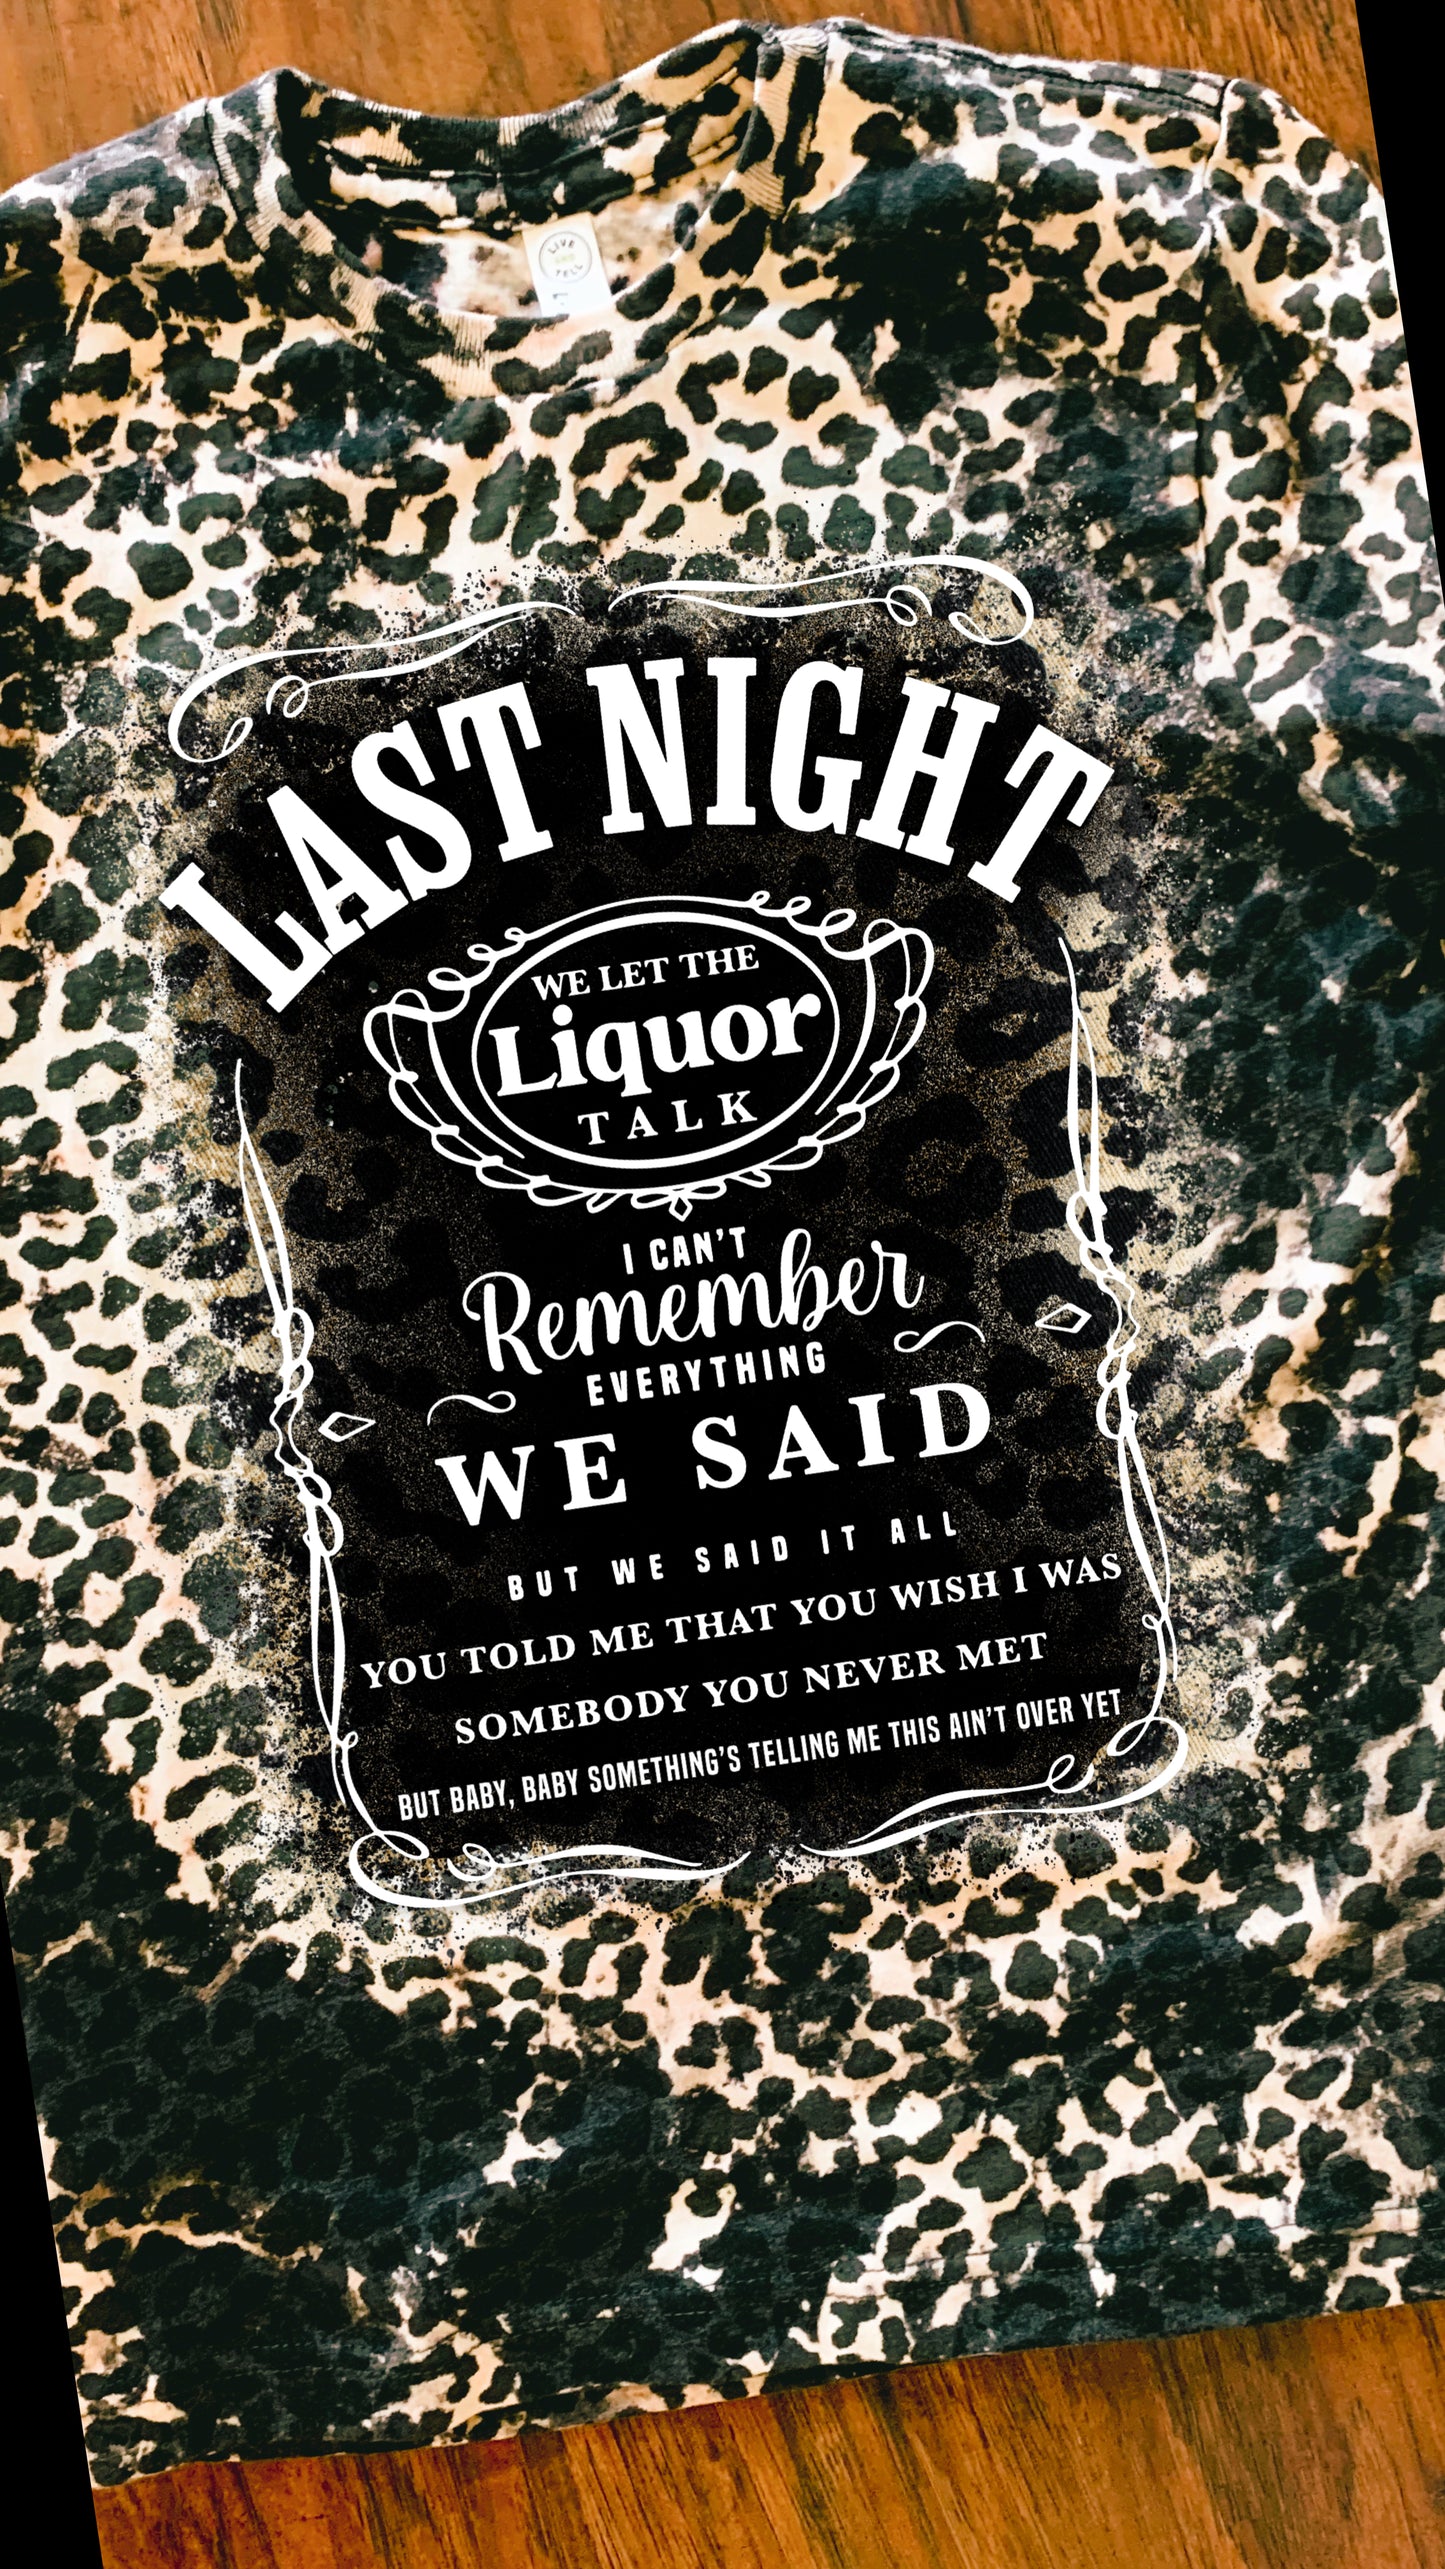 Last Night we let the Liquor Talk